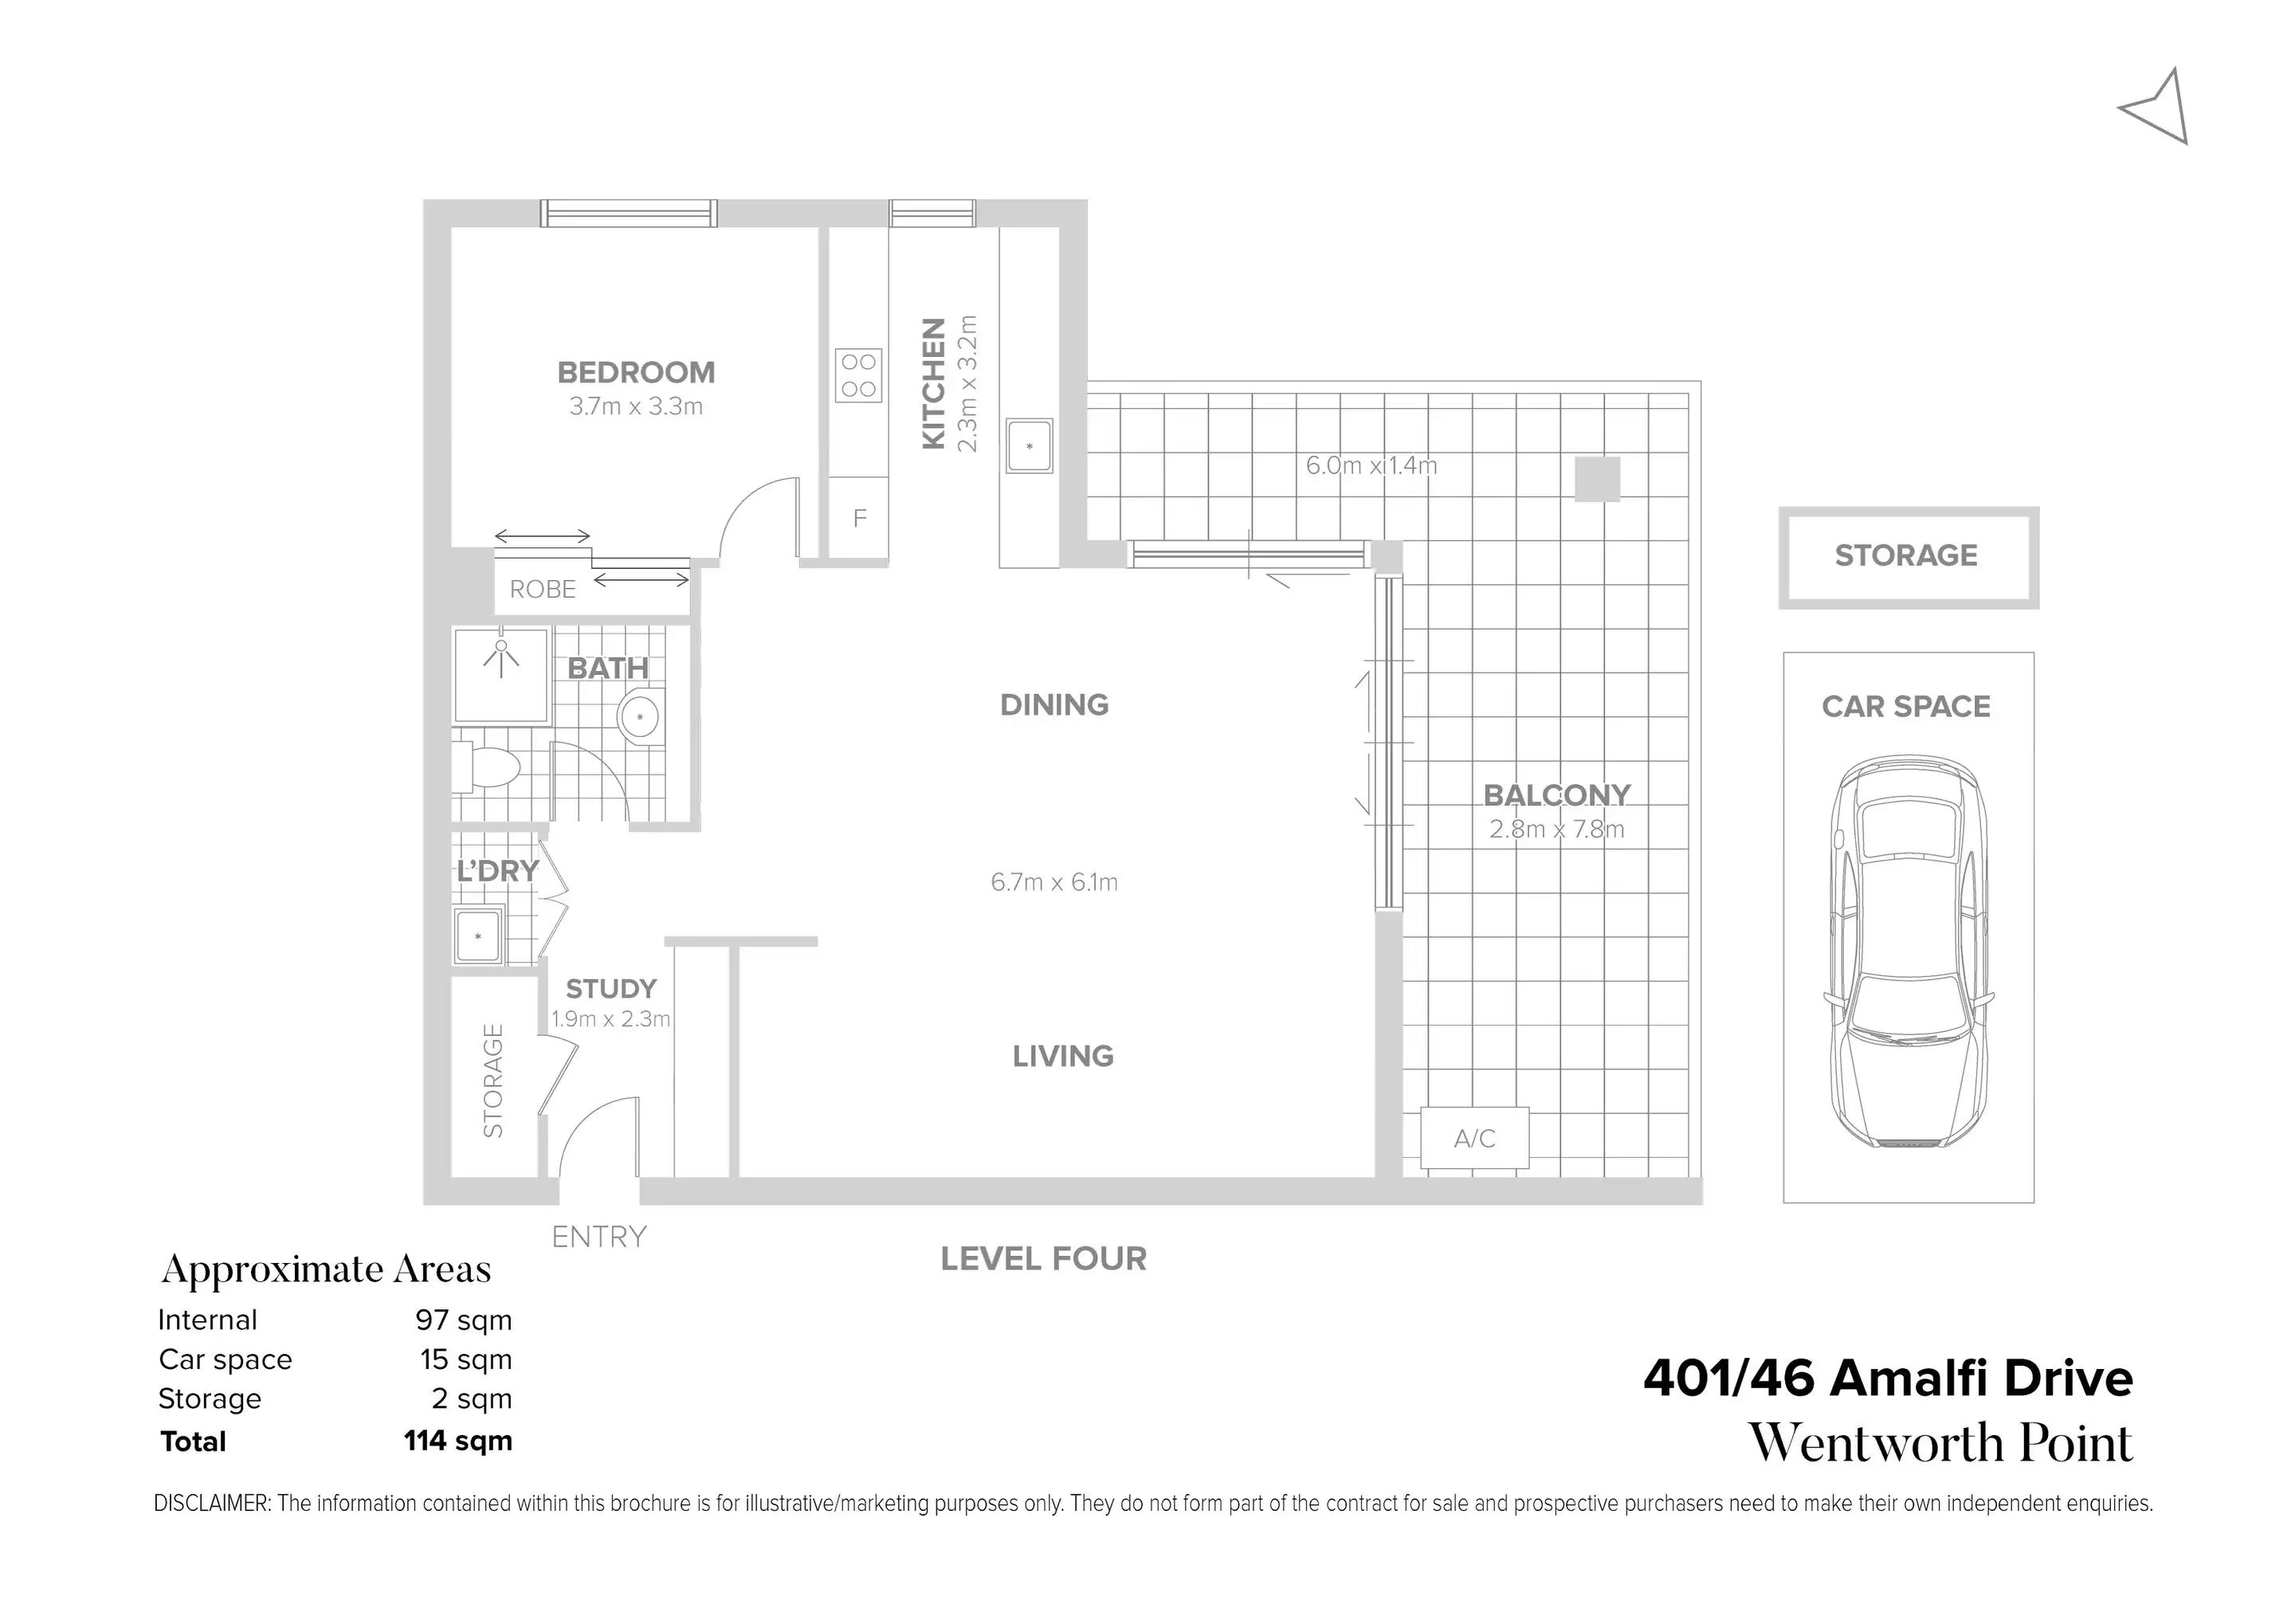 401/46 Amalfi Drive, Wentworth Point Sold by Chidiac Realty - floorplan